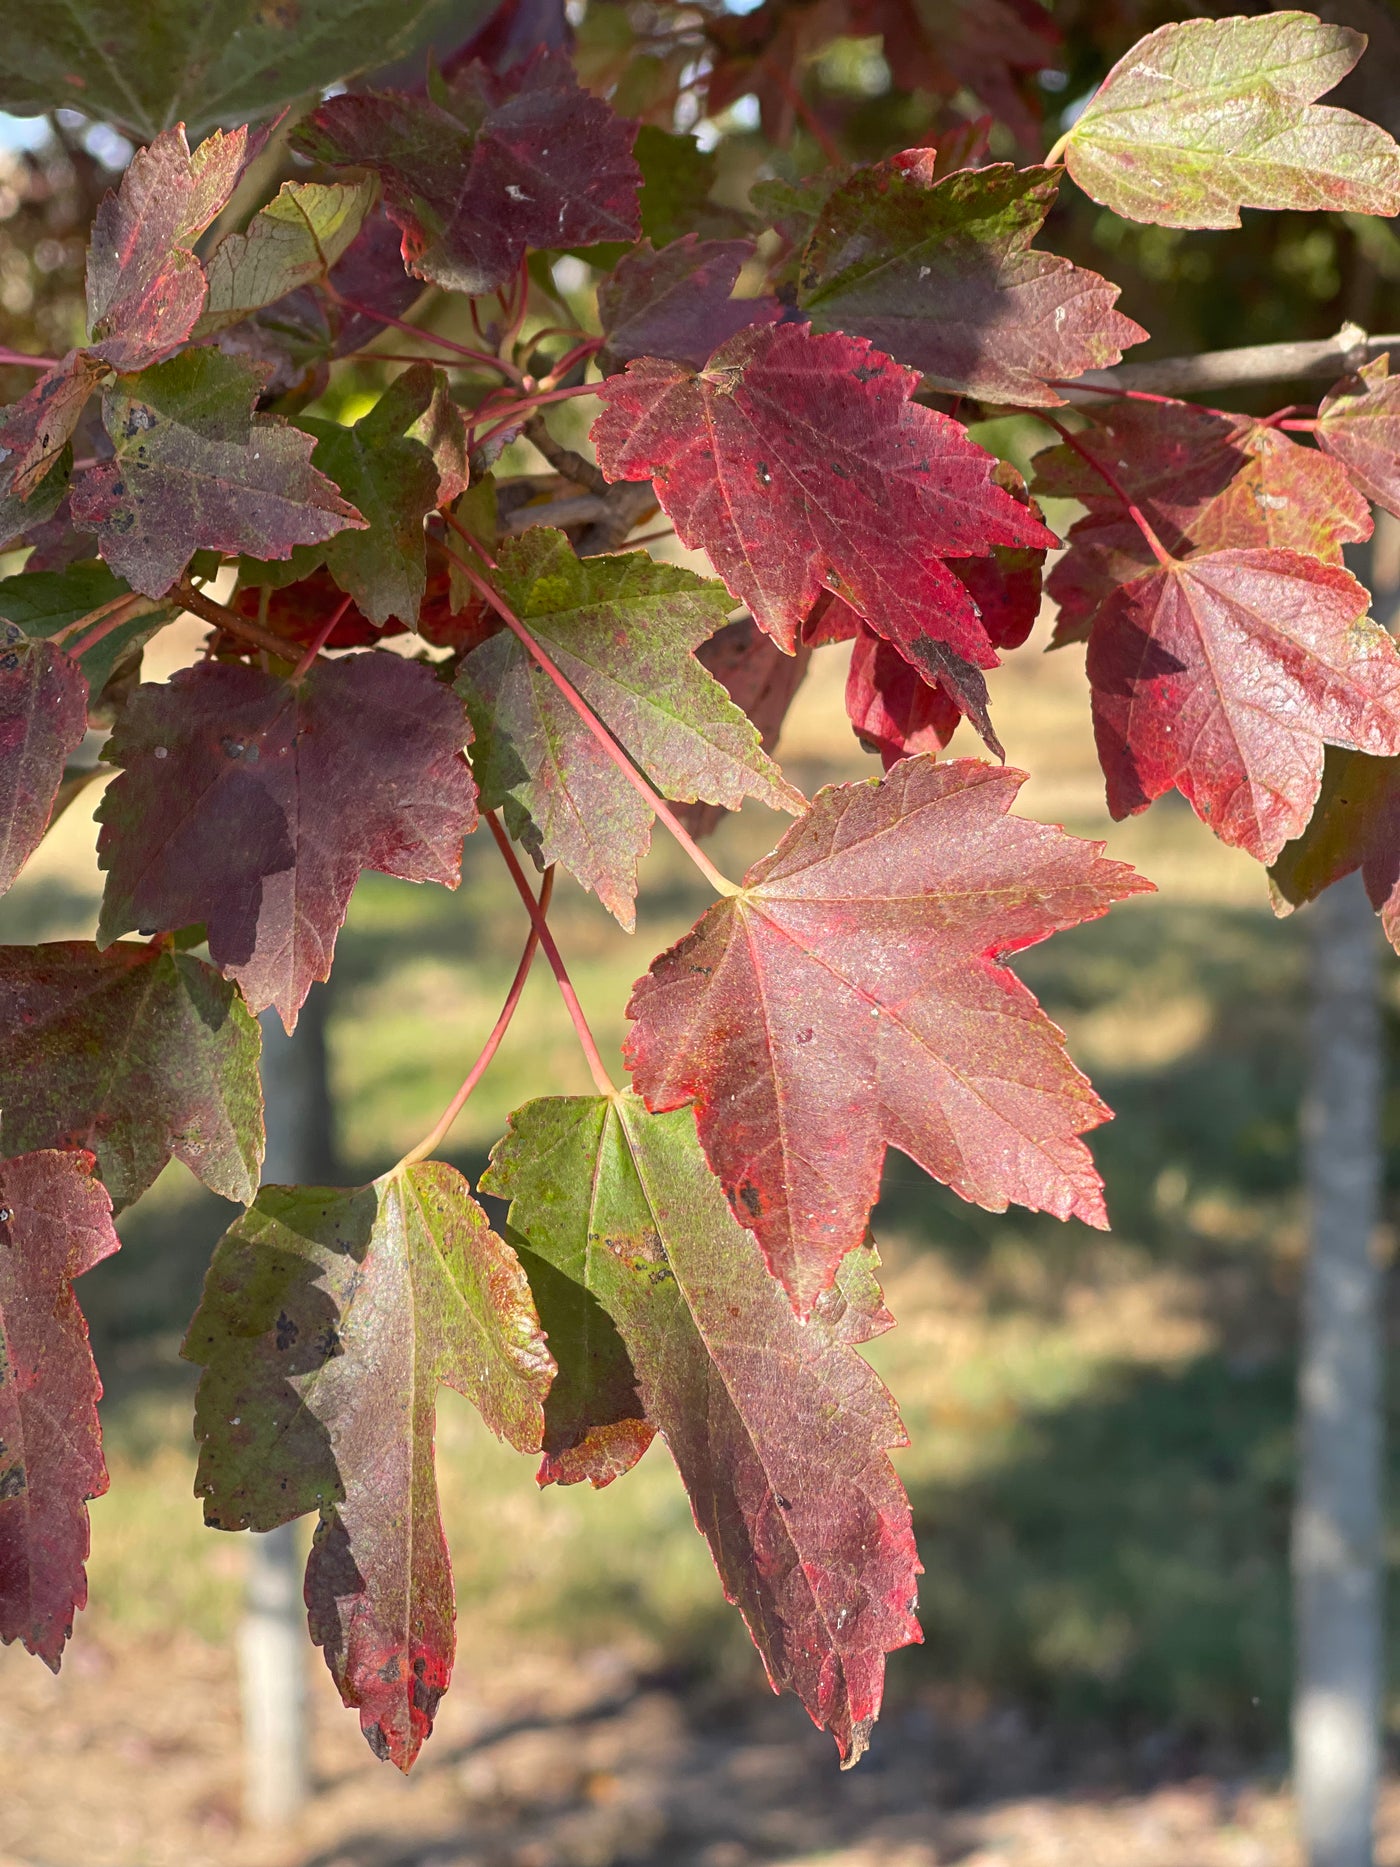 Acer rubrum 'Brandywine' ~ Brandywine arce rojo